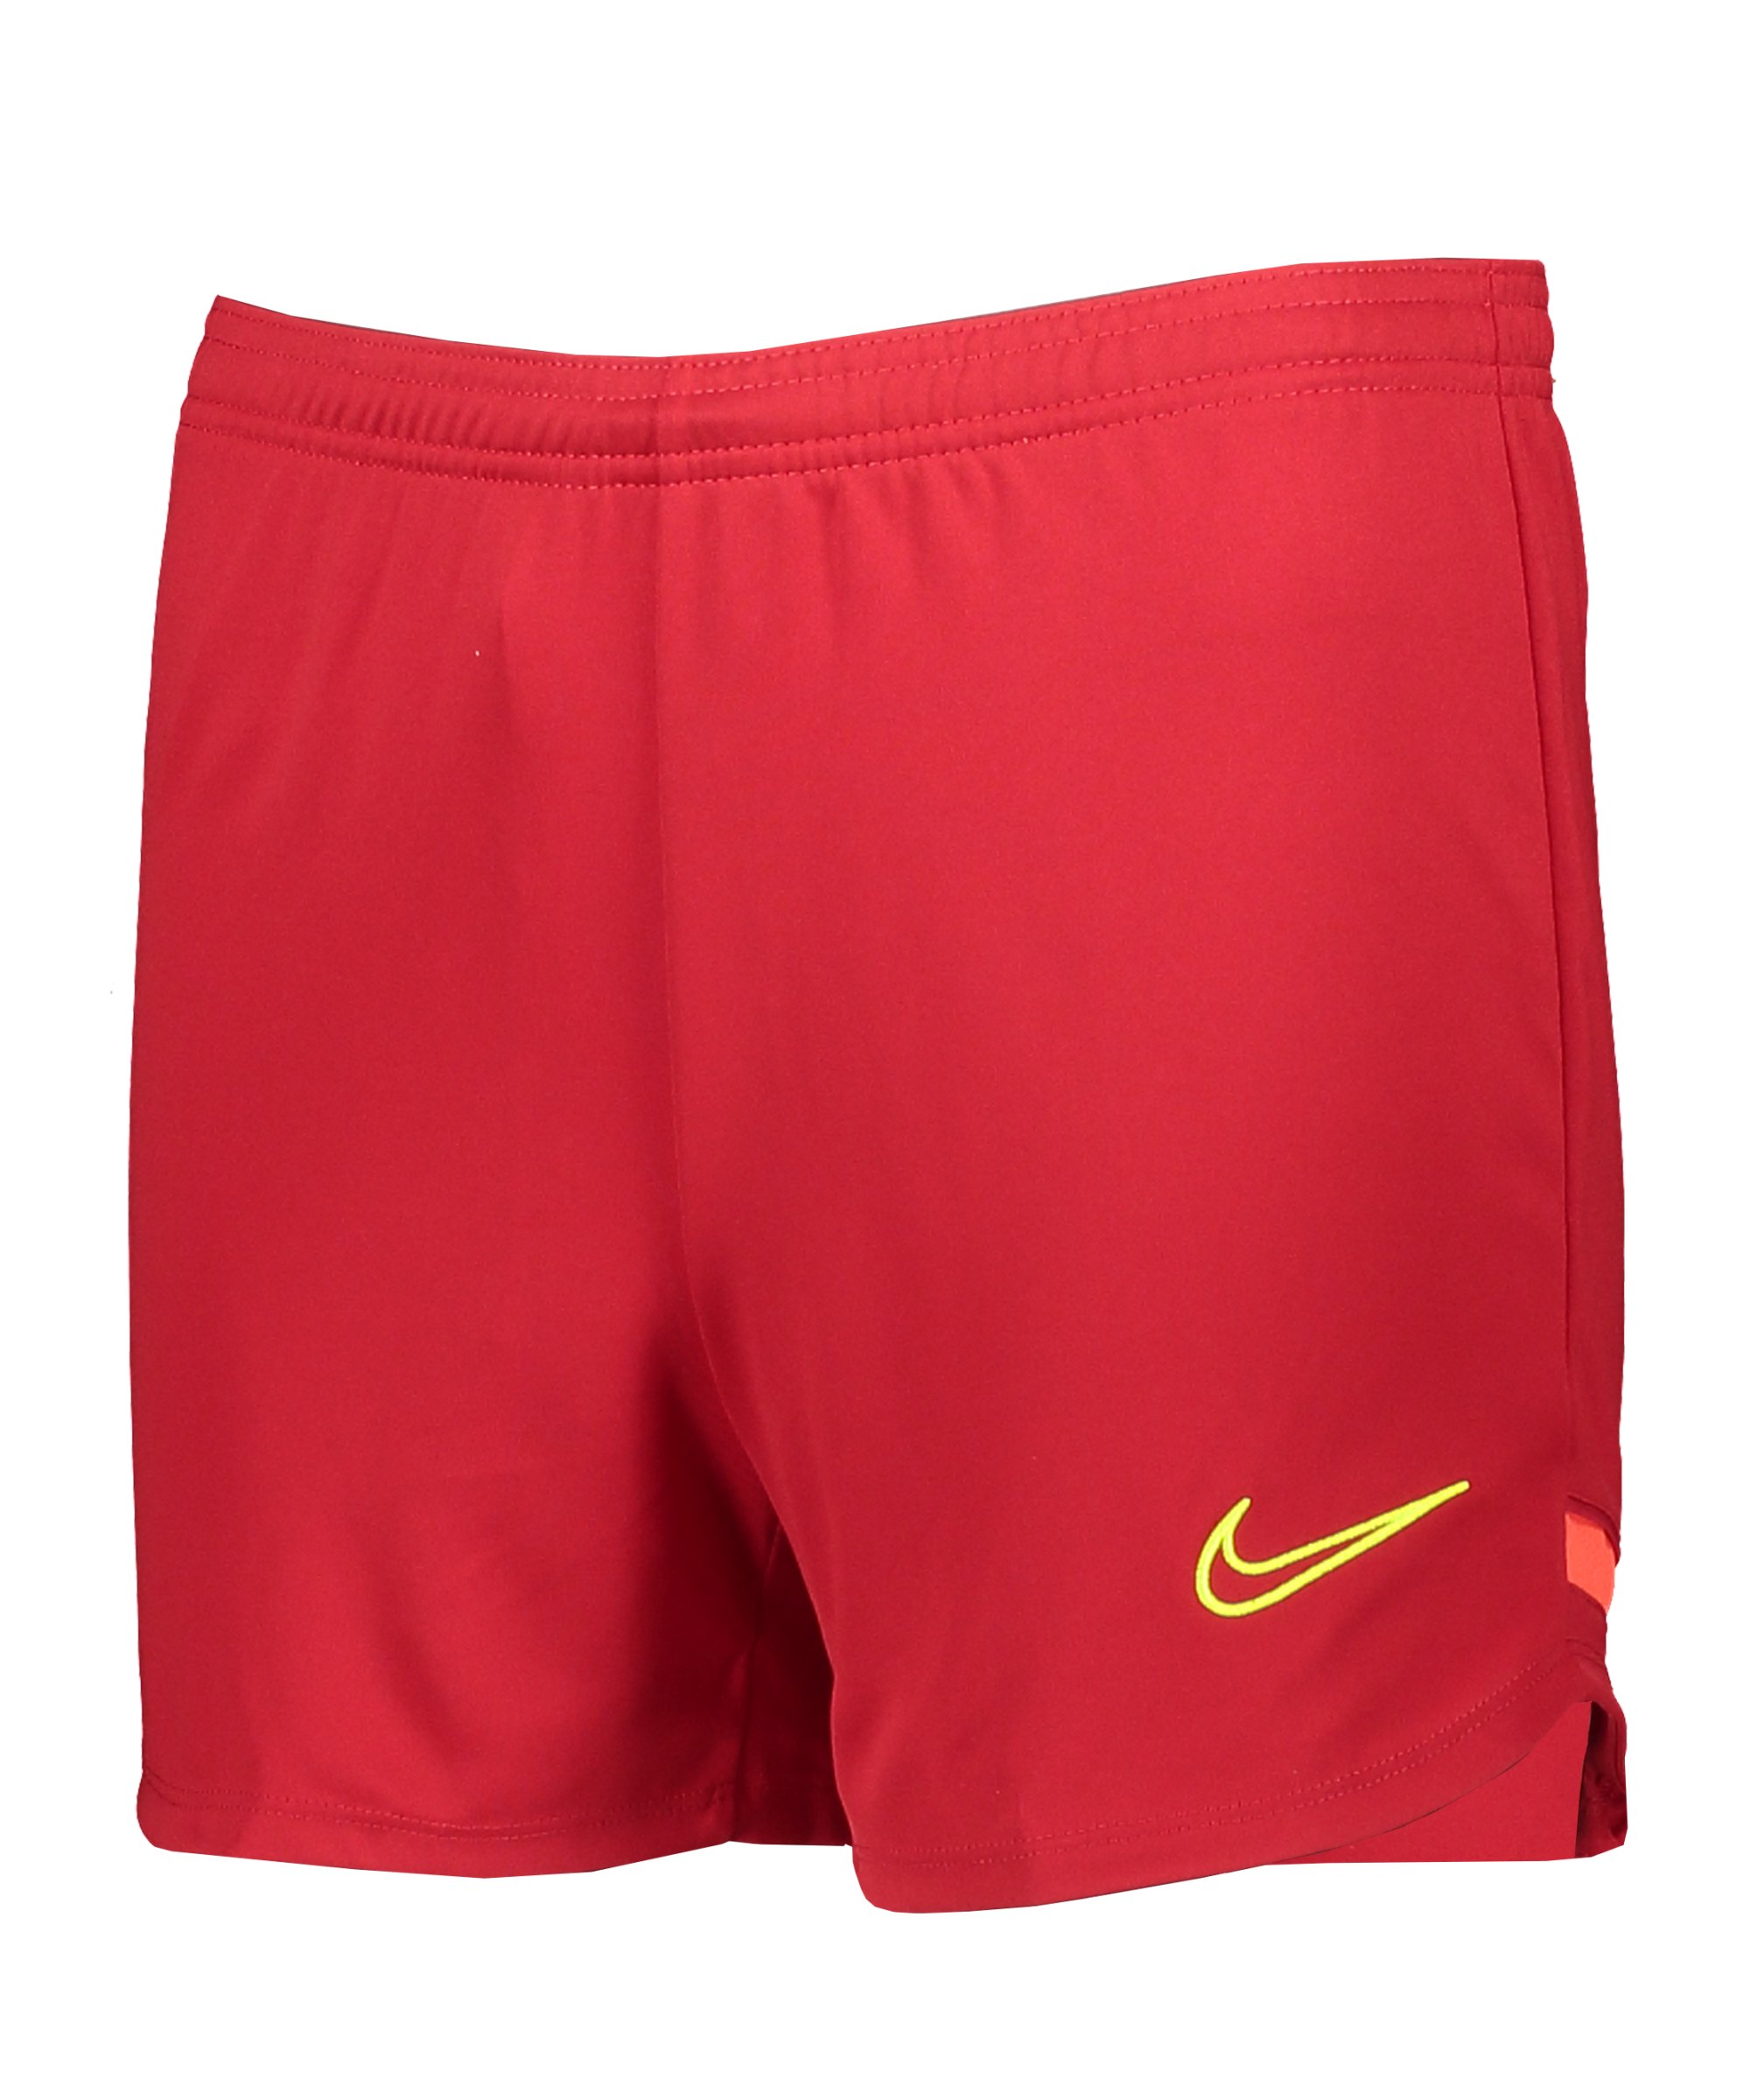 Nike Academy 21 Short Damen Rot F687 - rot